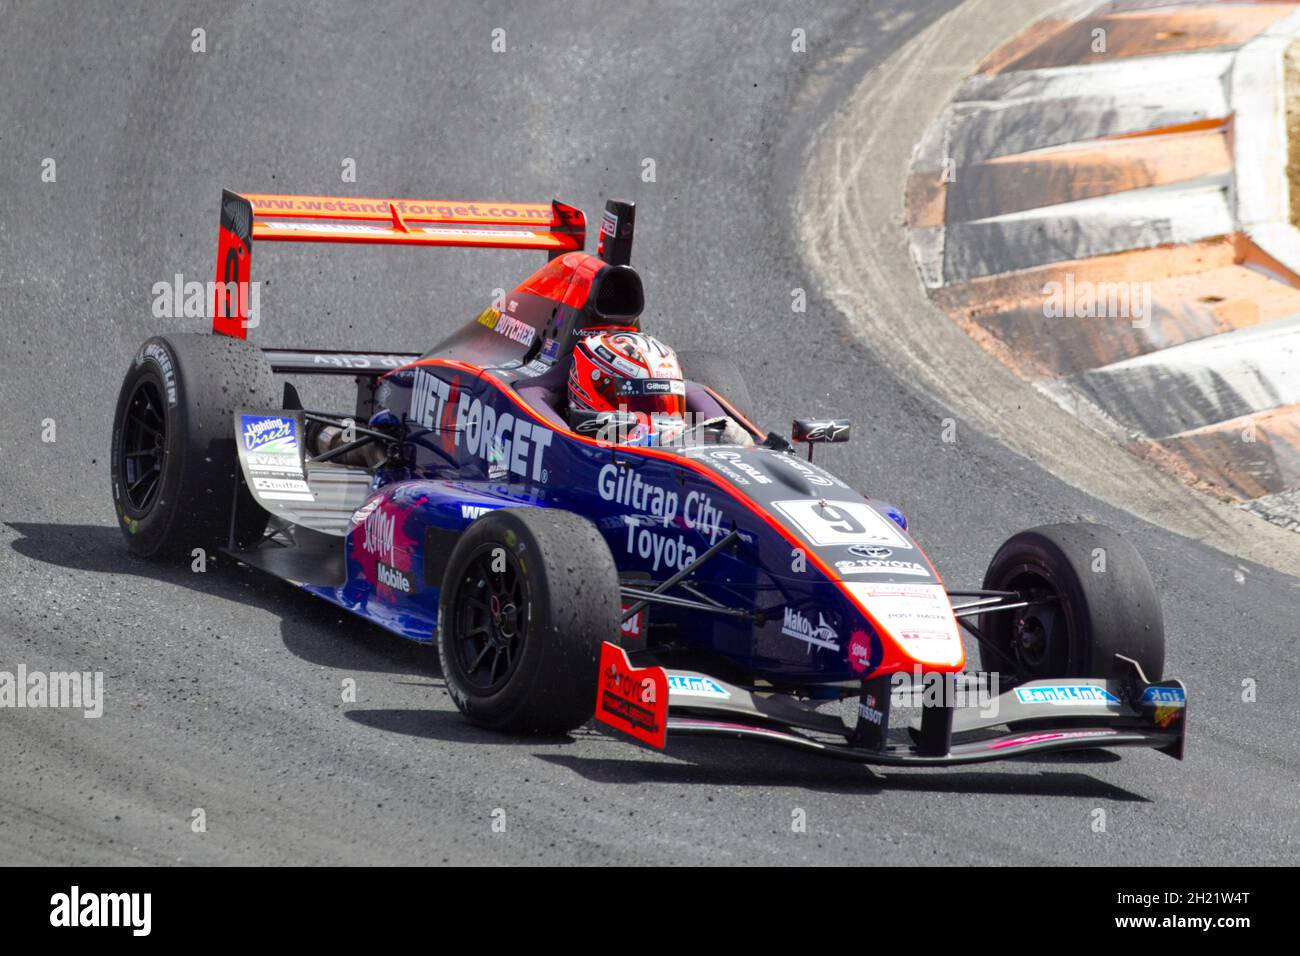 Campione pilota GP3 Mitch Evans che gareggia nella Toyota Racing Series 2013, Hampton Downs, Nuova Zelanda, sabato 02 febbraio, 2013. Foto Stock